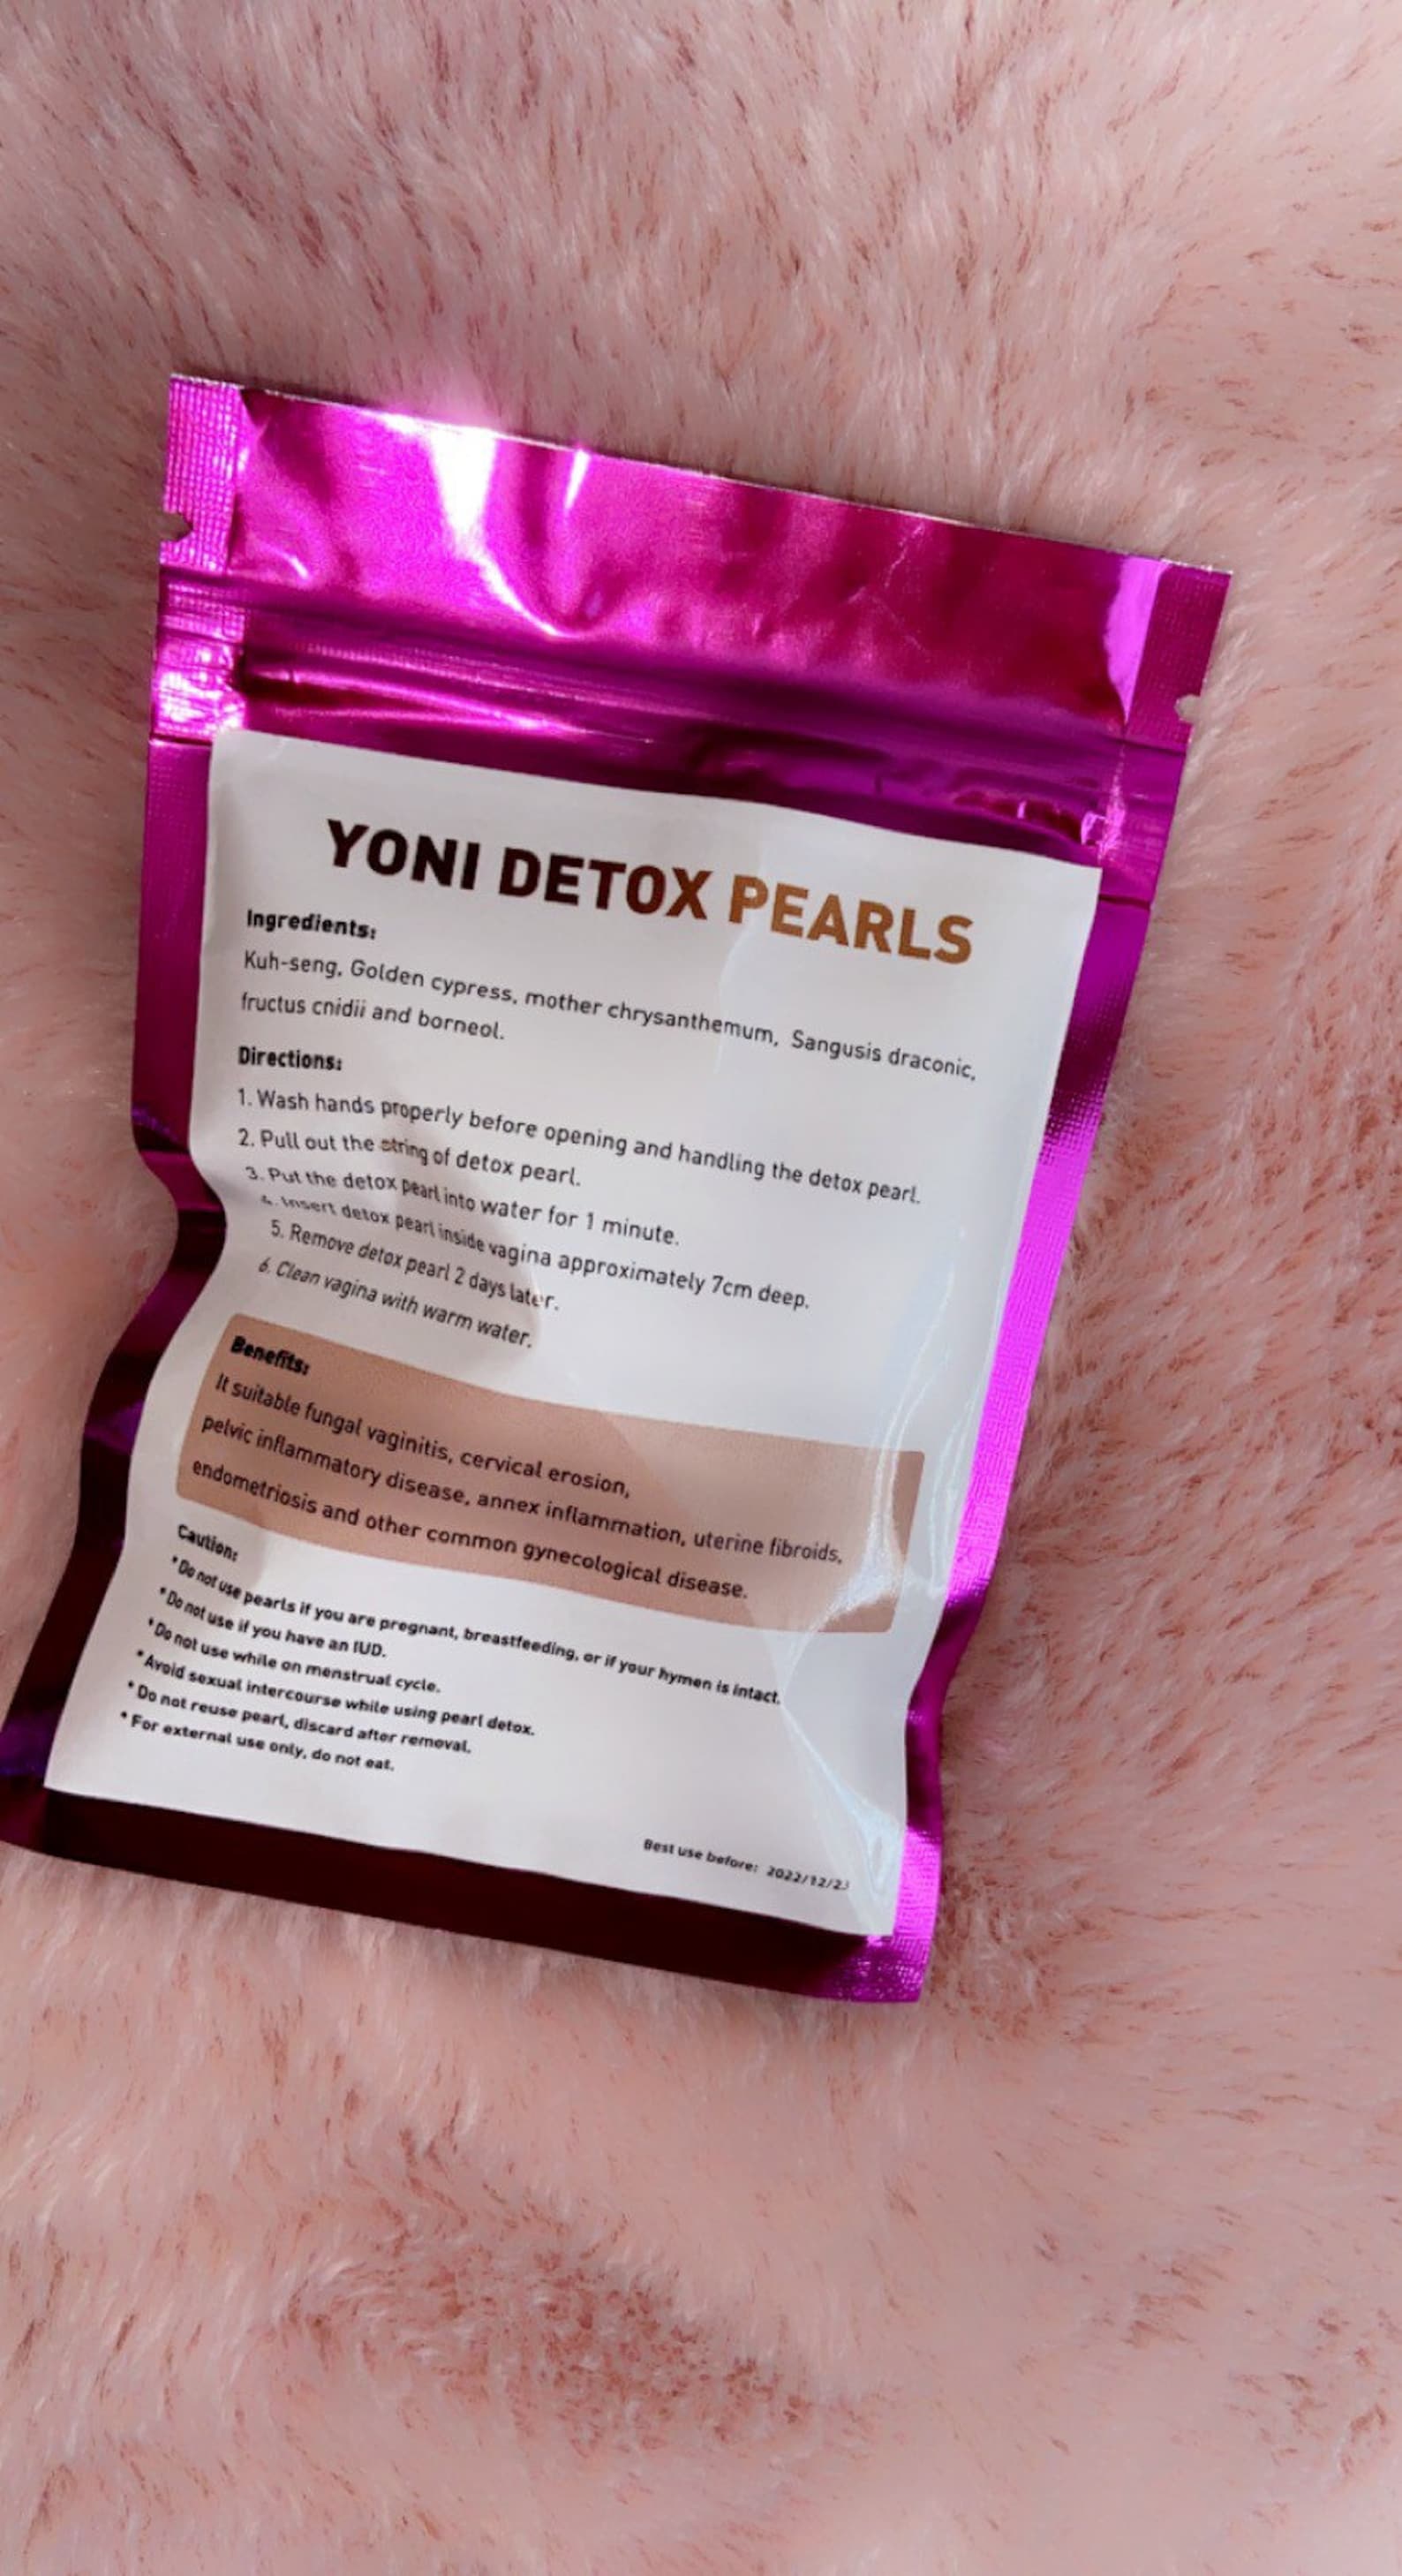 Yoni detox pearls | Etsy